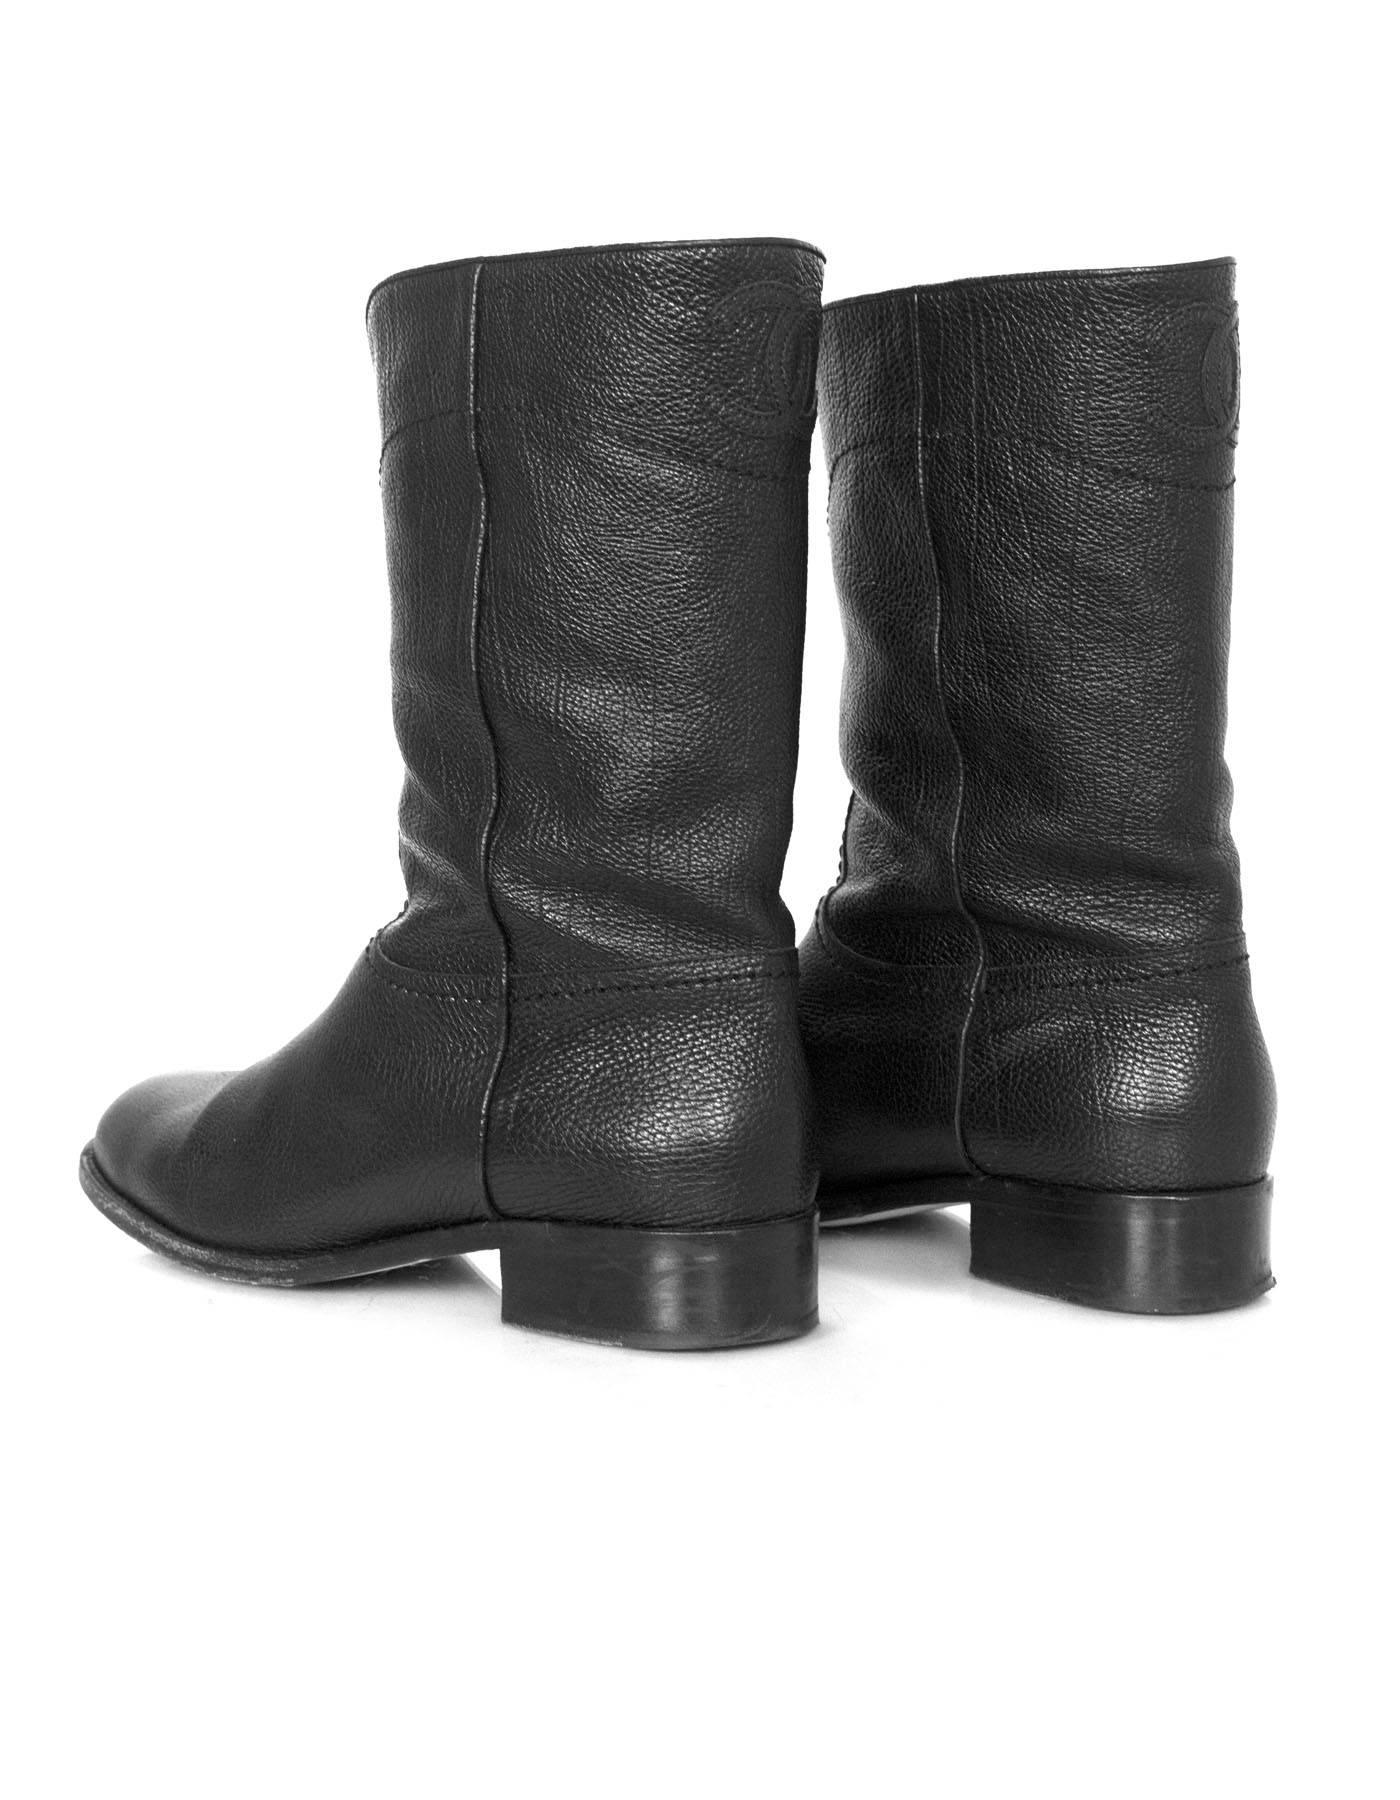 Chanel Black Leather Short Ascot Boots sz 42 1